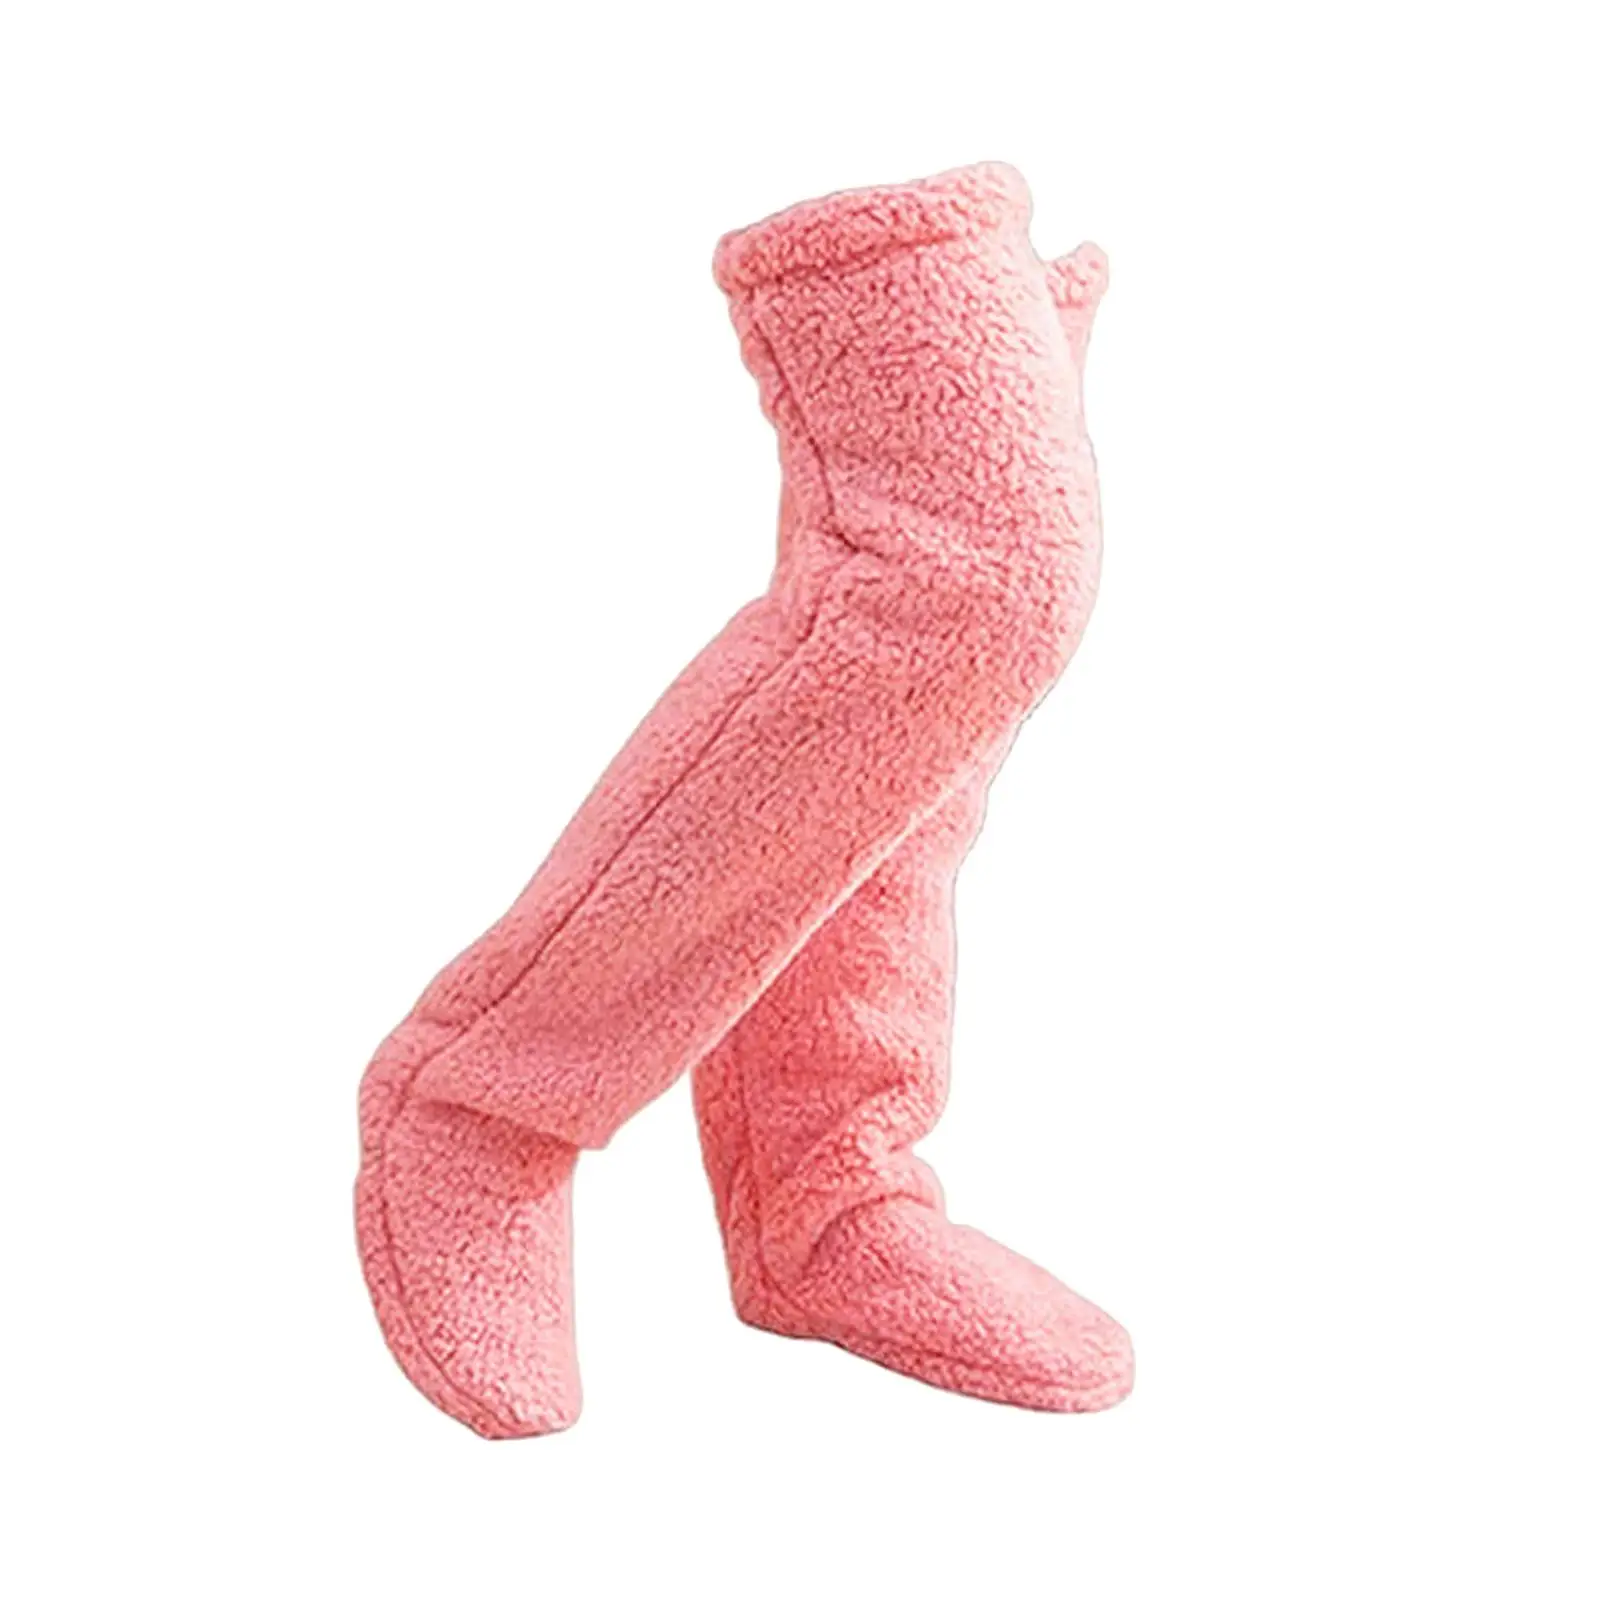 Thigh High Socks for Women Soft Long Tube Stockings Fleece Plush Leg Warmers